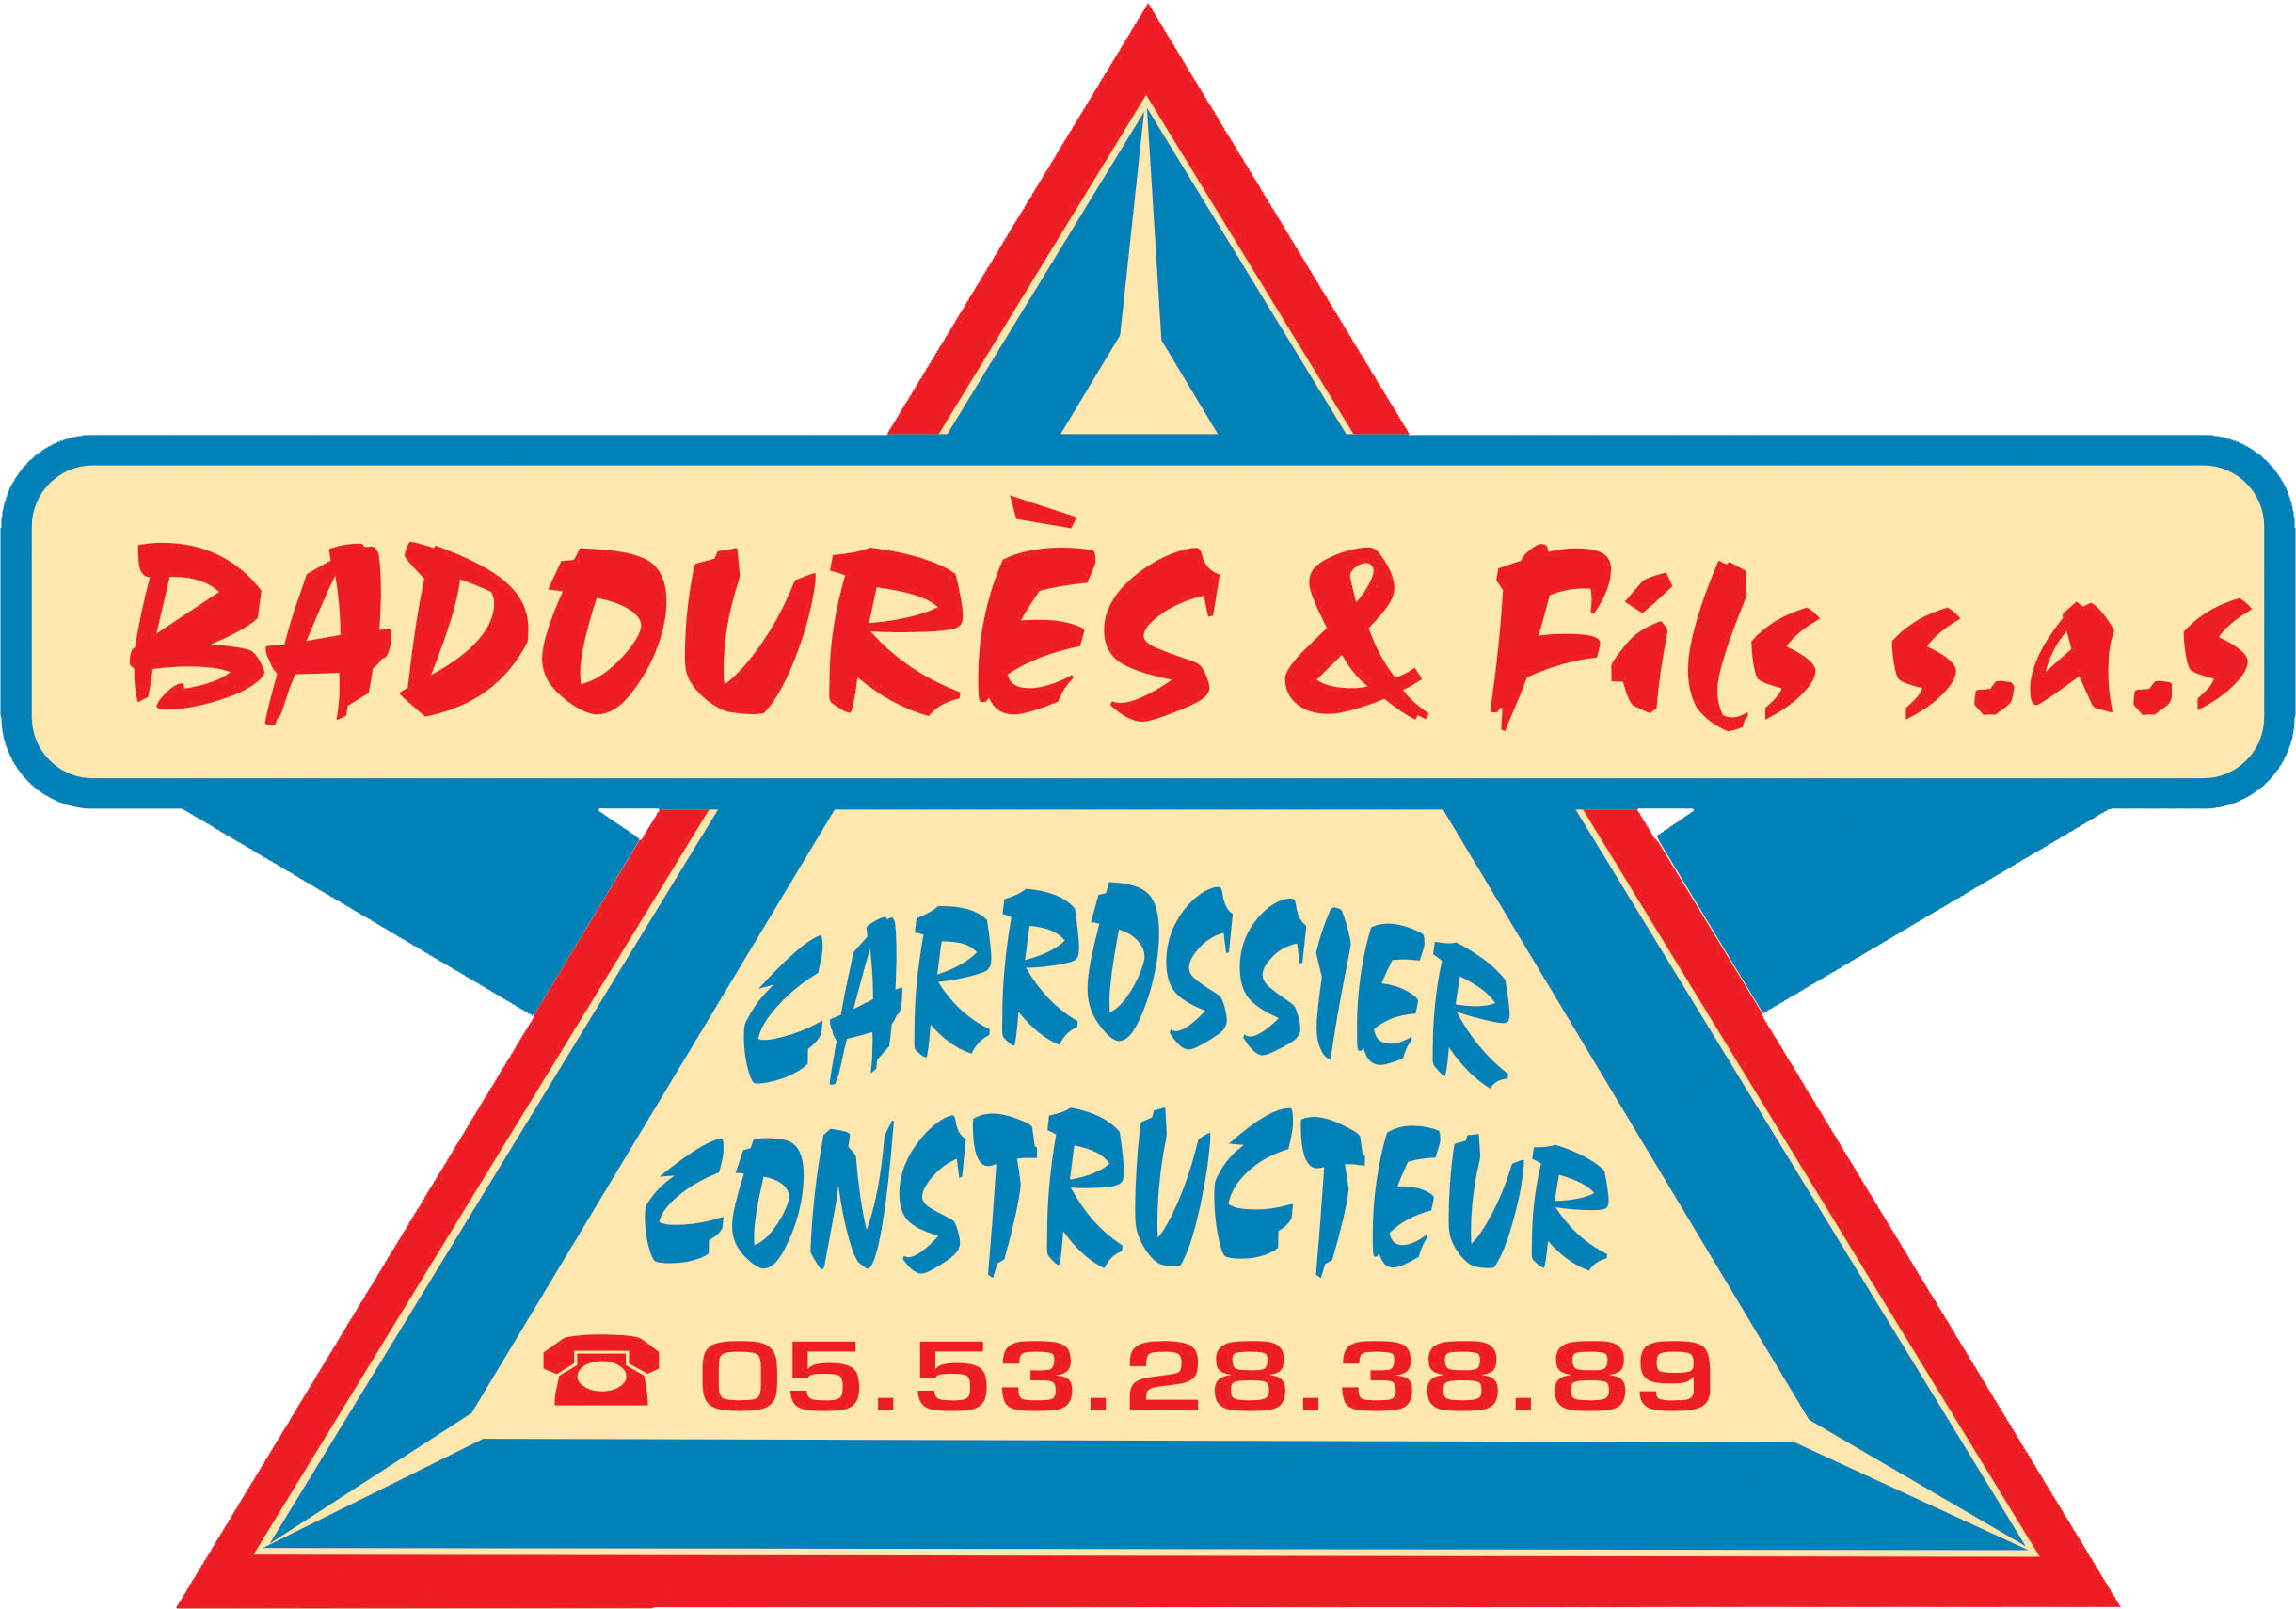 Carrossier Constructeur SAS BADOURES